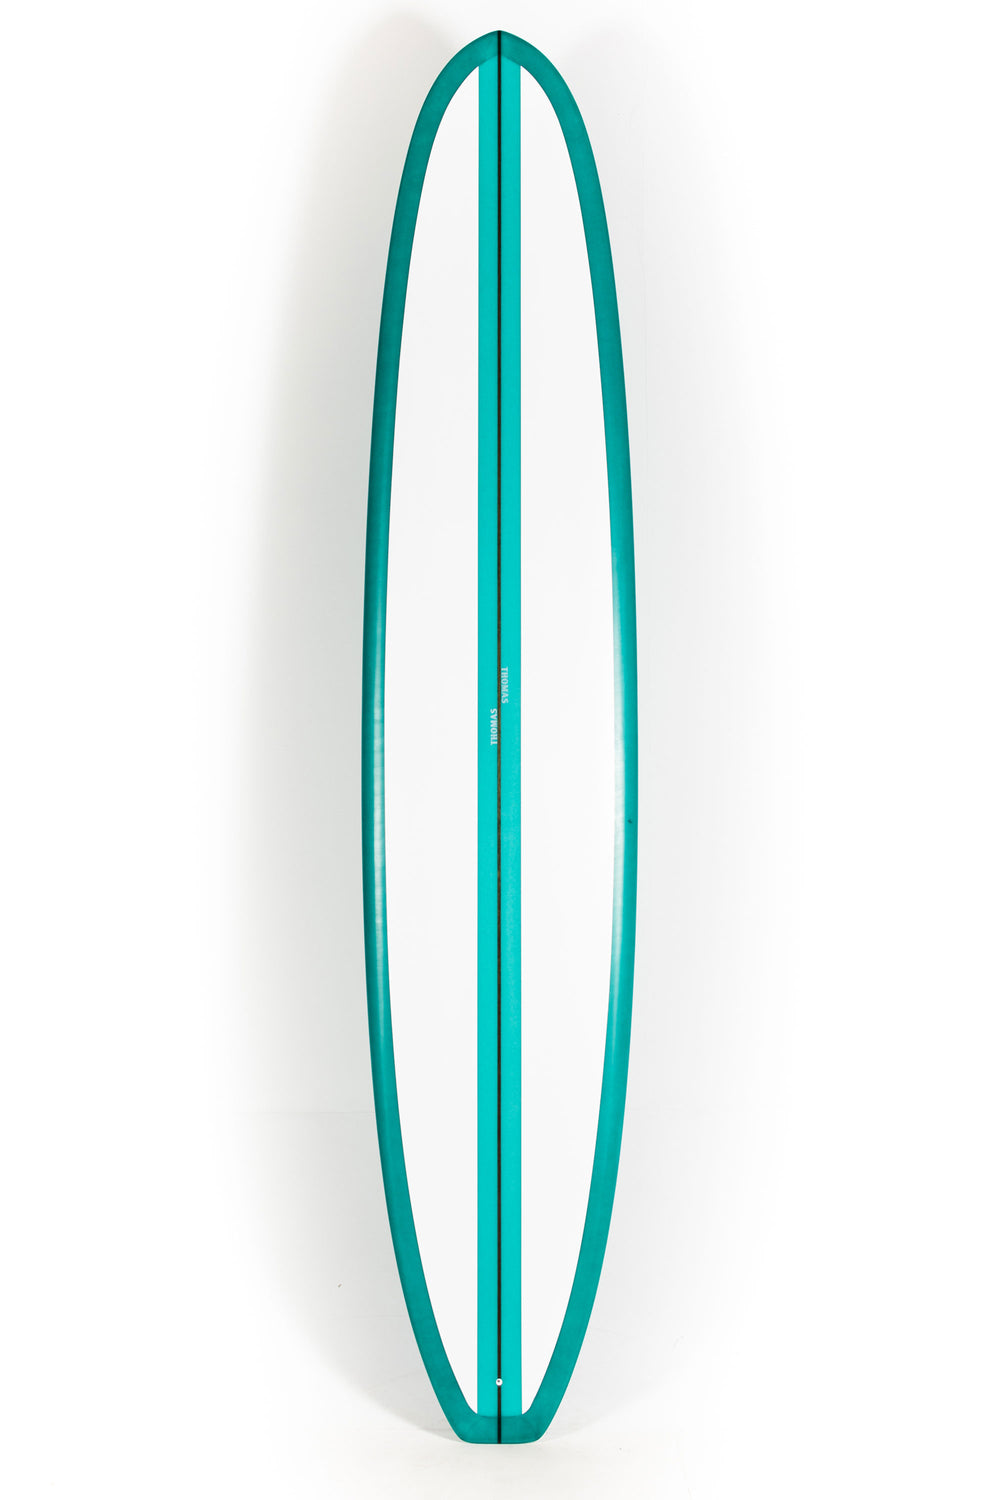 Pukas Surf Shop - Thomas Surfboards - HARRISON - 9'8